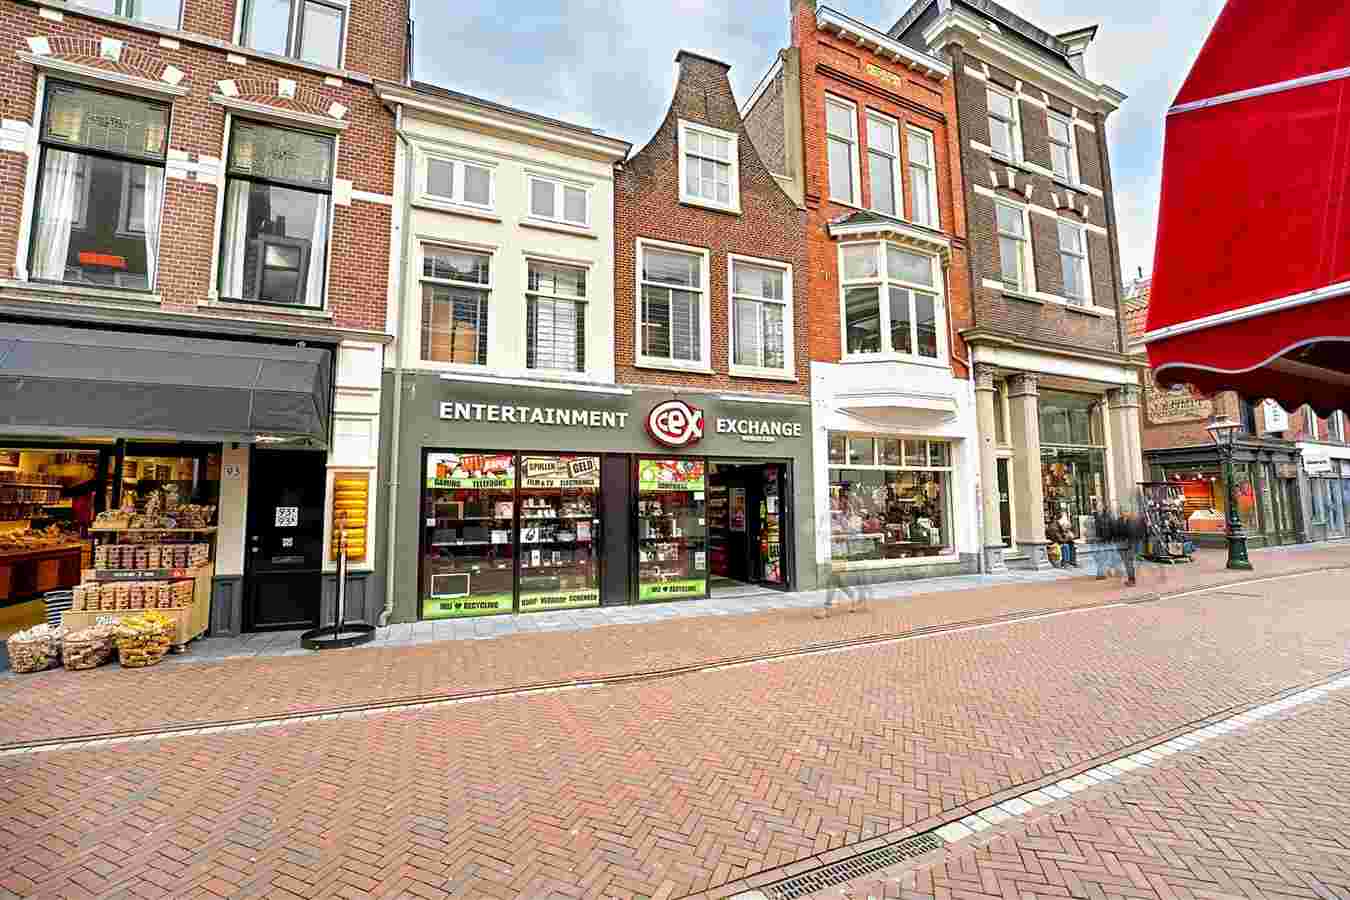 Haarlemmerstraat 89 - 91